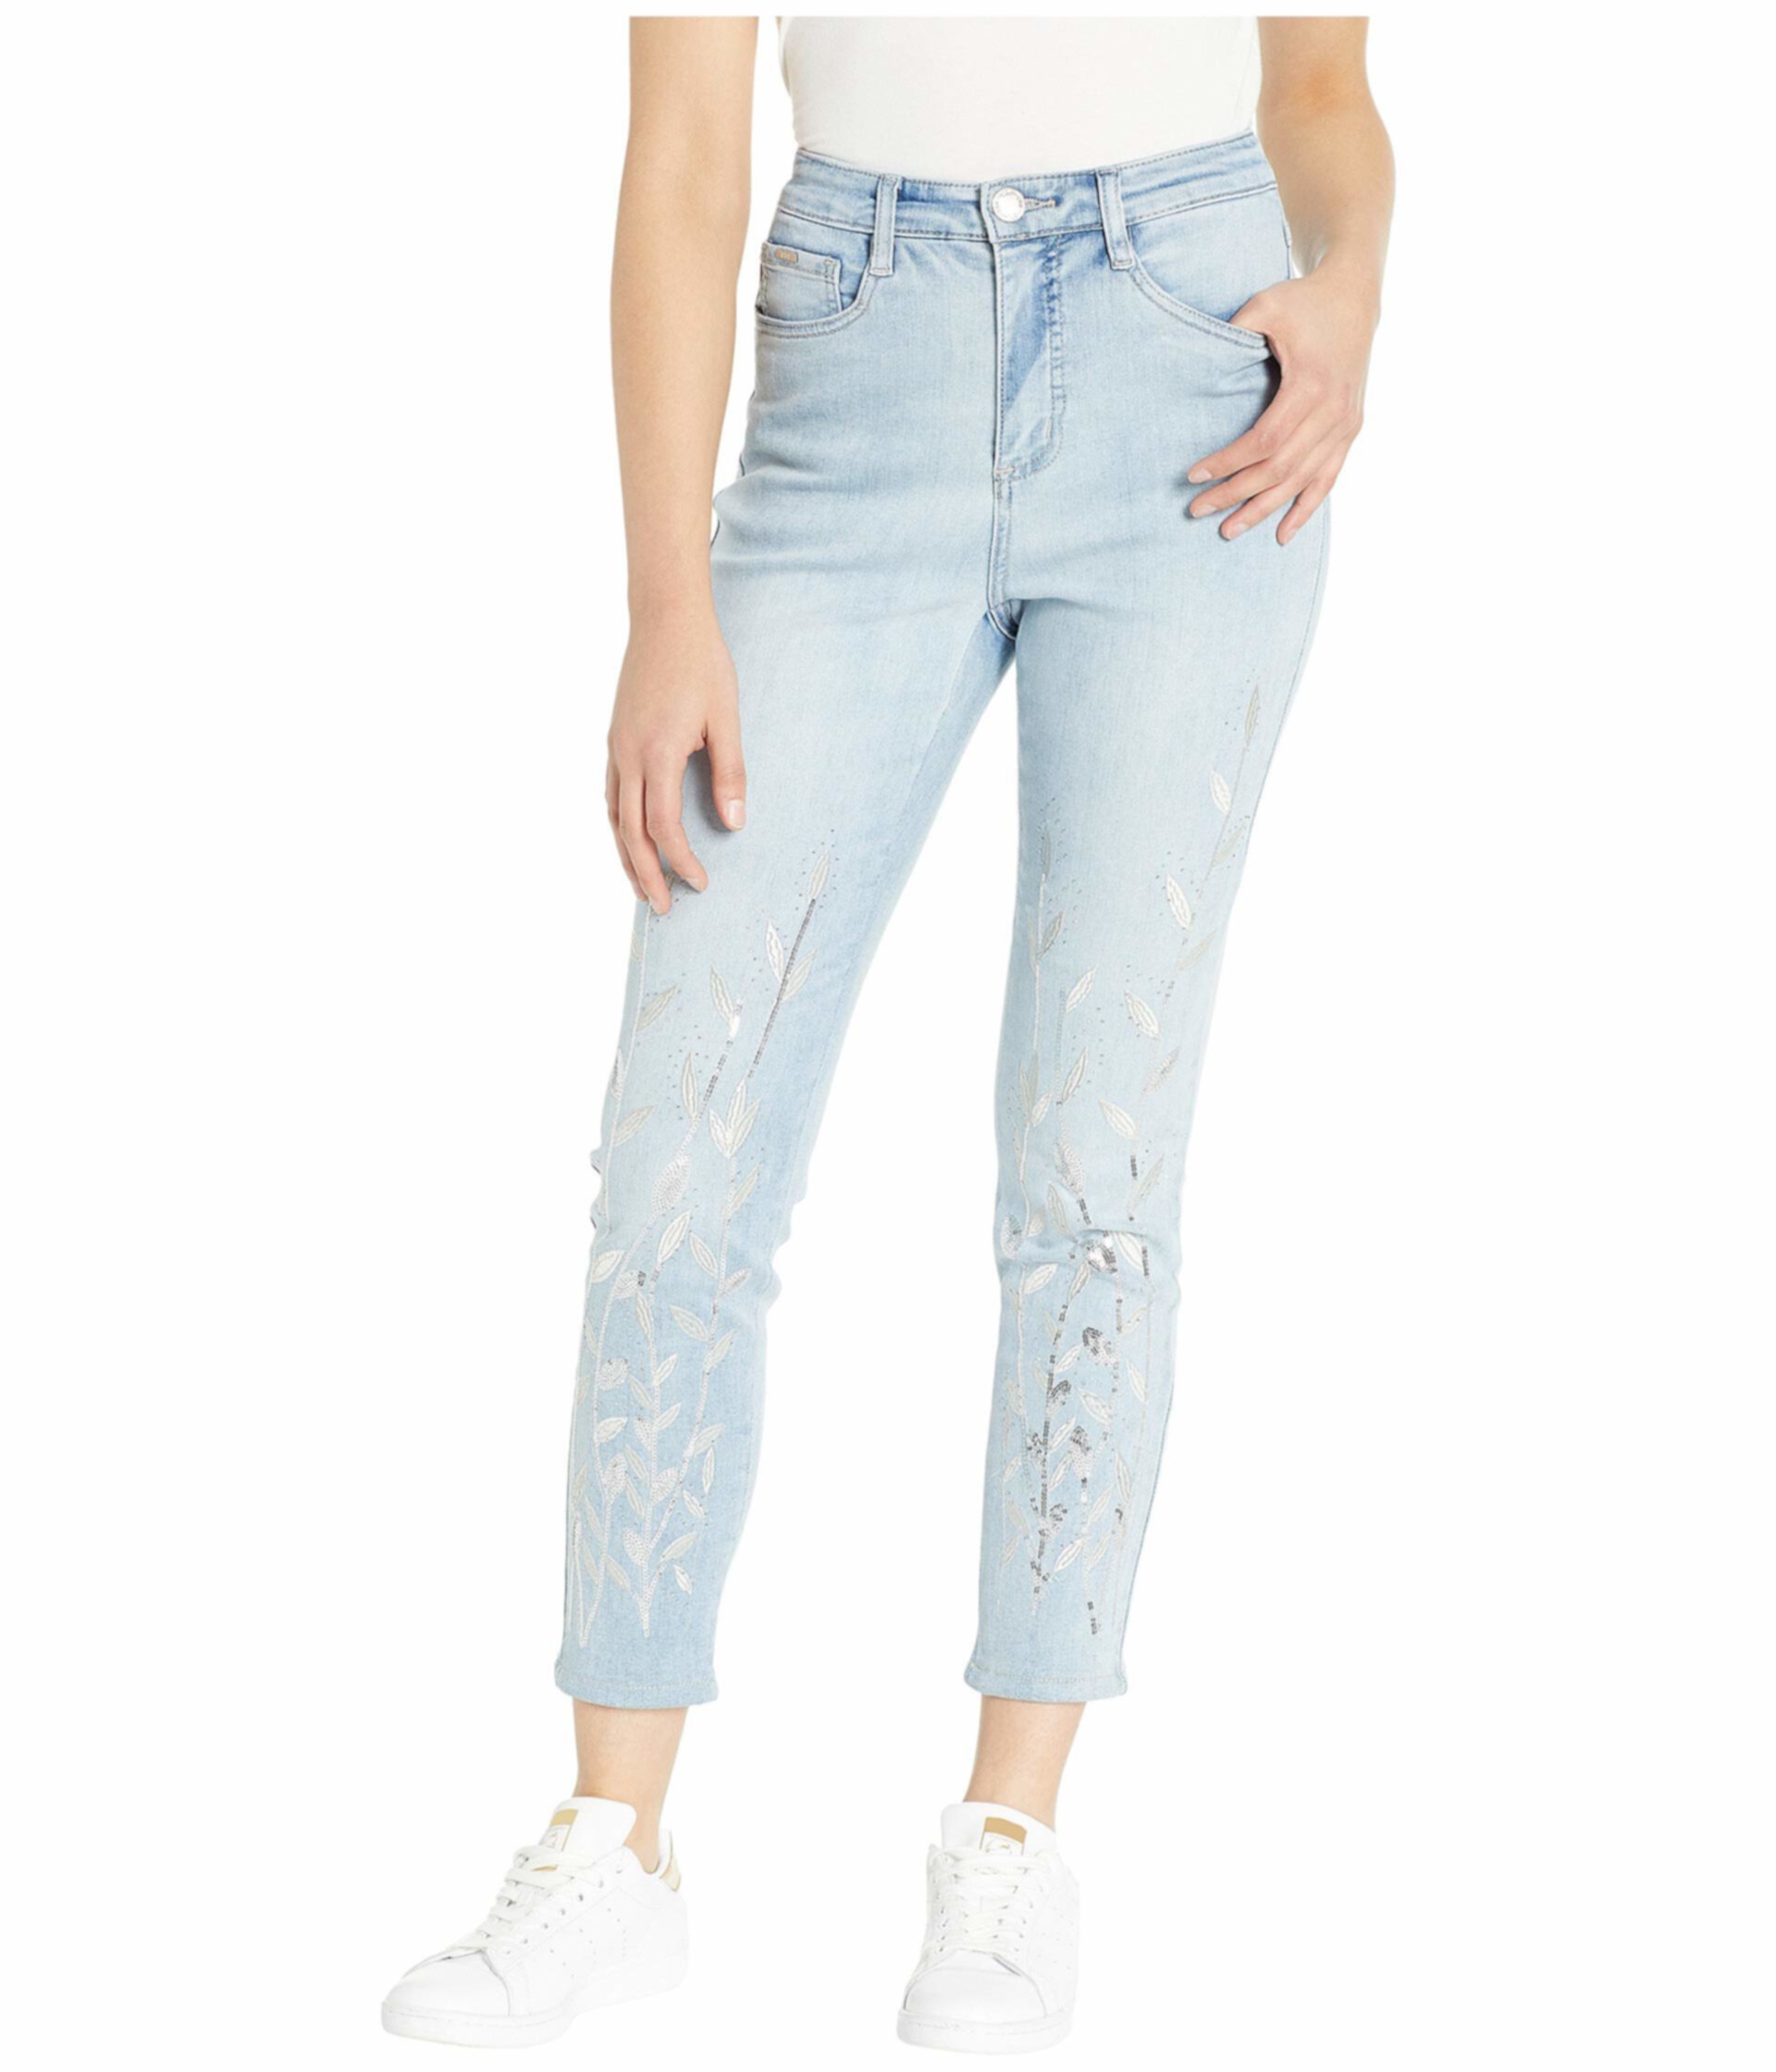 Узкая вышивка на лодыжке с блестками и блестками Suzanne FDJ French Dressing Jeans